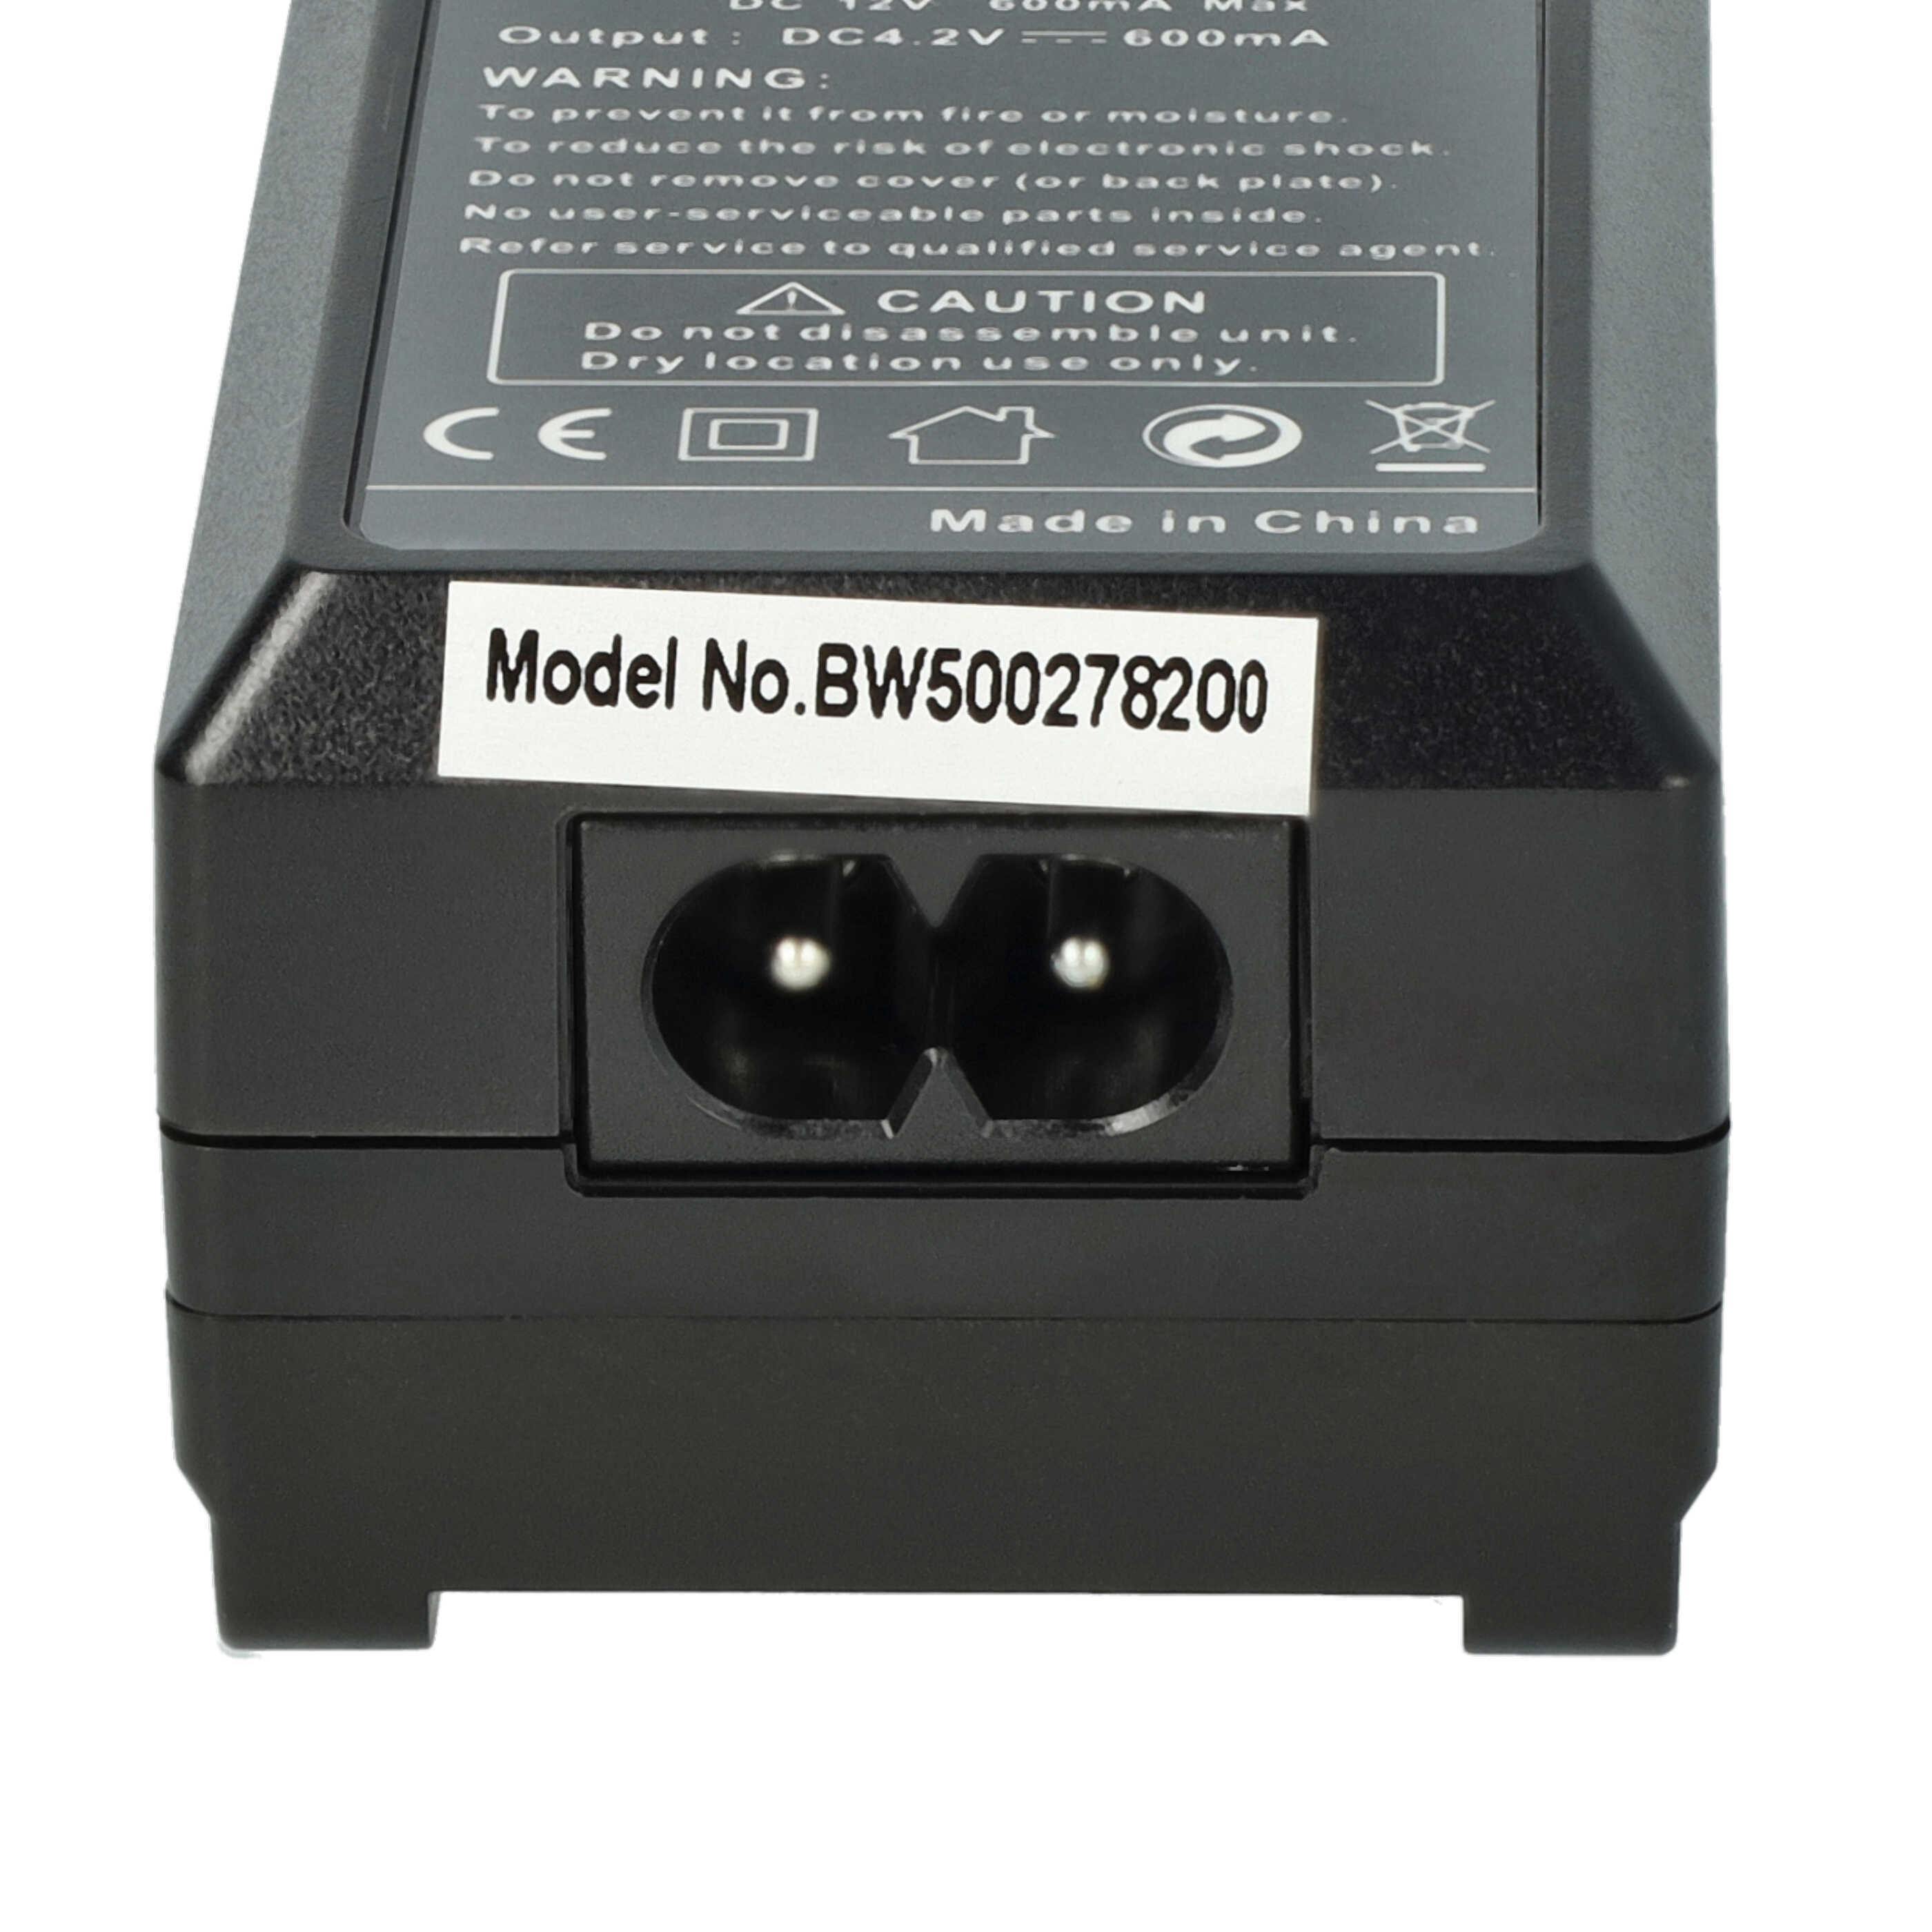 Ładowarka do aparatu EasyShare M215 i innych - ładowarka akumulatora 0,6 A, 4,2 V